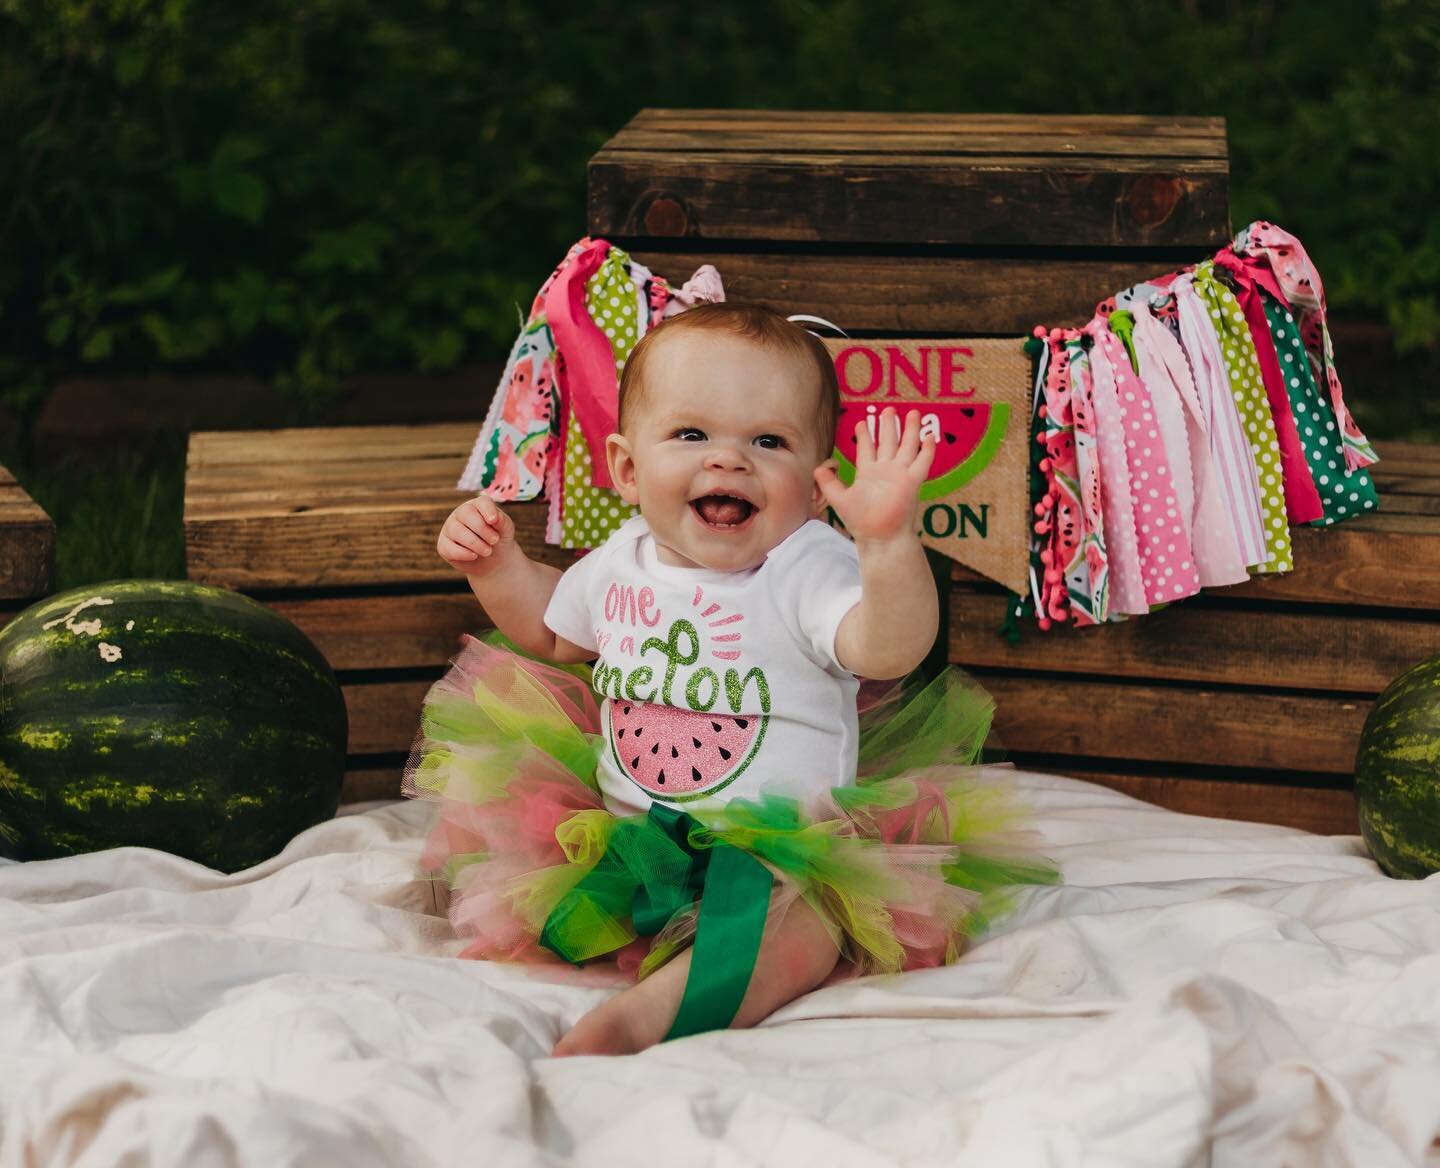 Elena, you&rsquo;re one in a melon! 🍉

Happy 1st Birthday! 
.
.
.
.
.
.
.
.
.
#firstbirthday #smashcake #babygirl #mamasgirl #happybirthday #westmichiganphotographer #grandrapids #grandrapidsphotographer #grandrapidsphotography #watermelonsugar